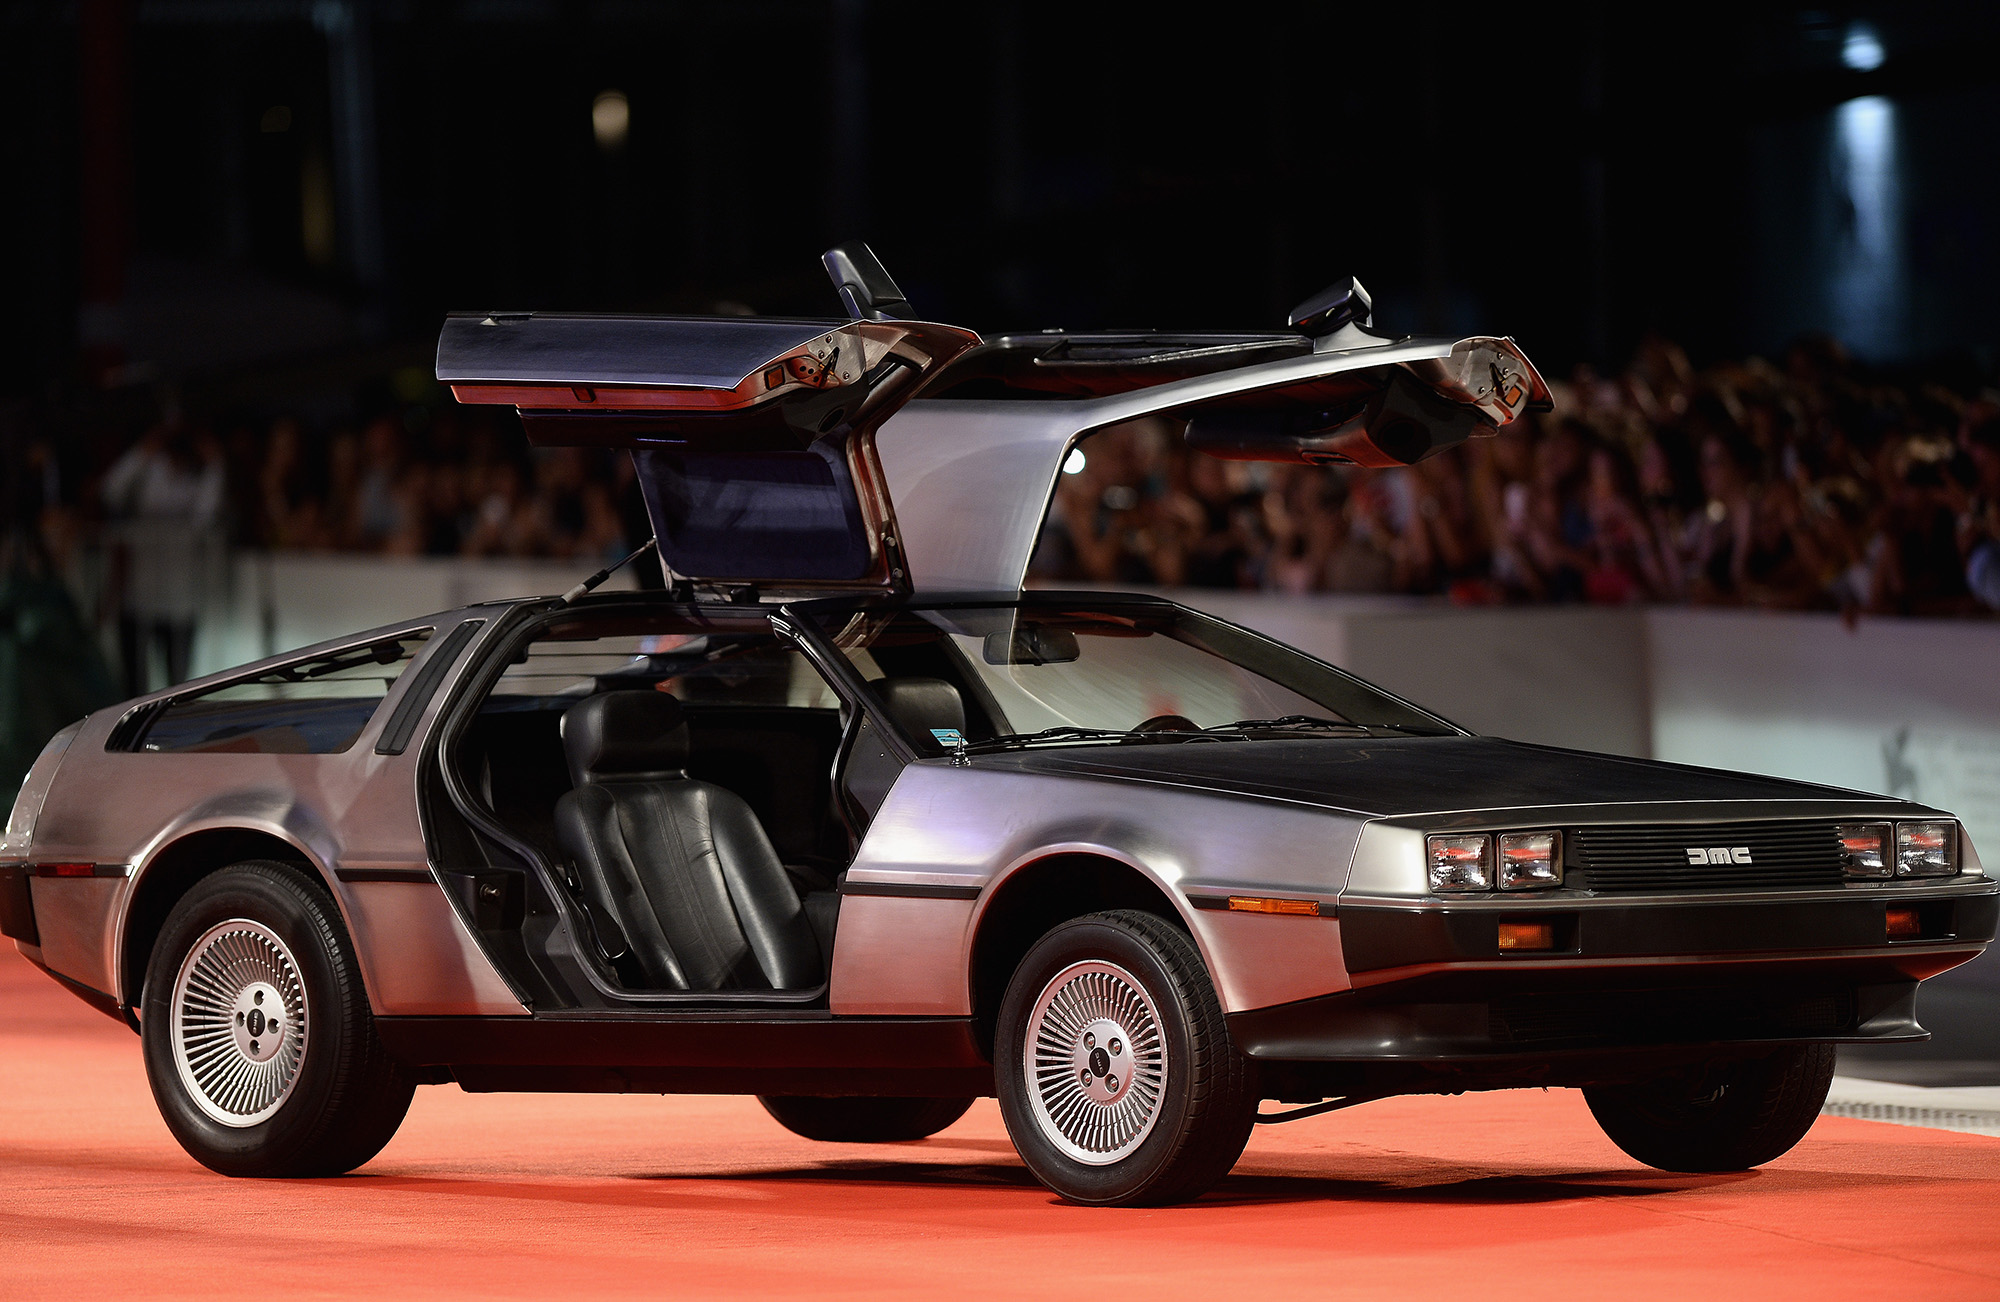 An original DeLorean during a movie premier in Venice.